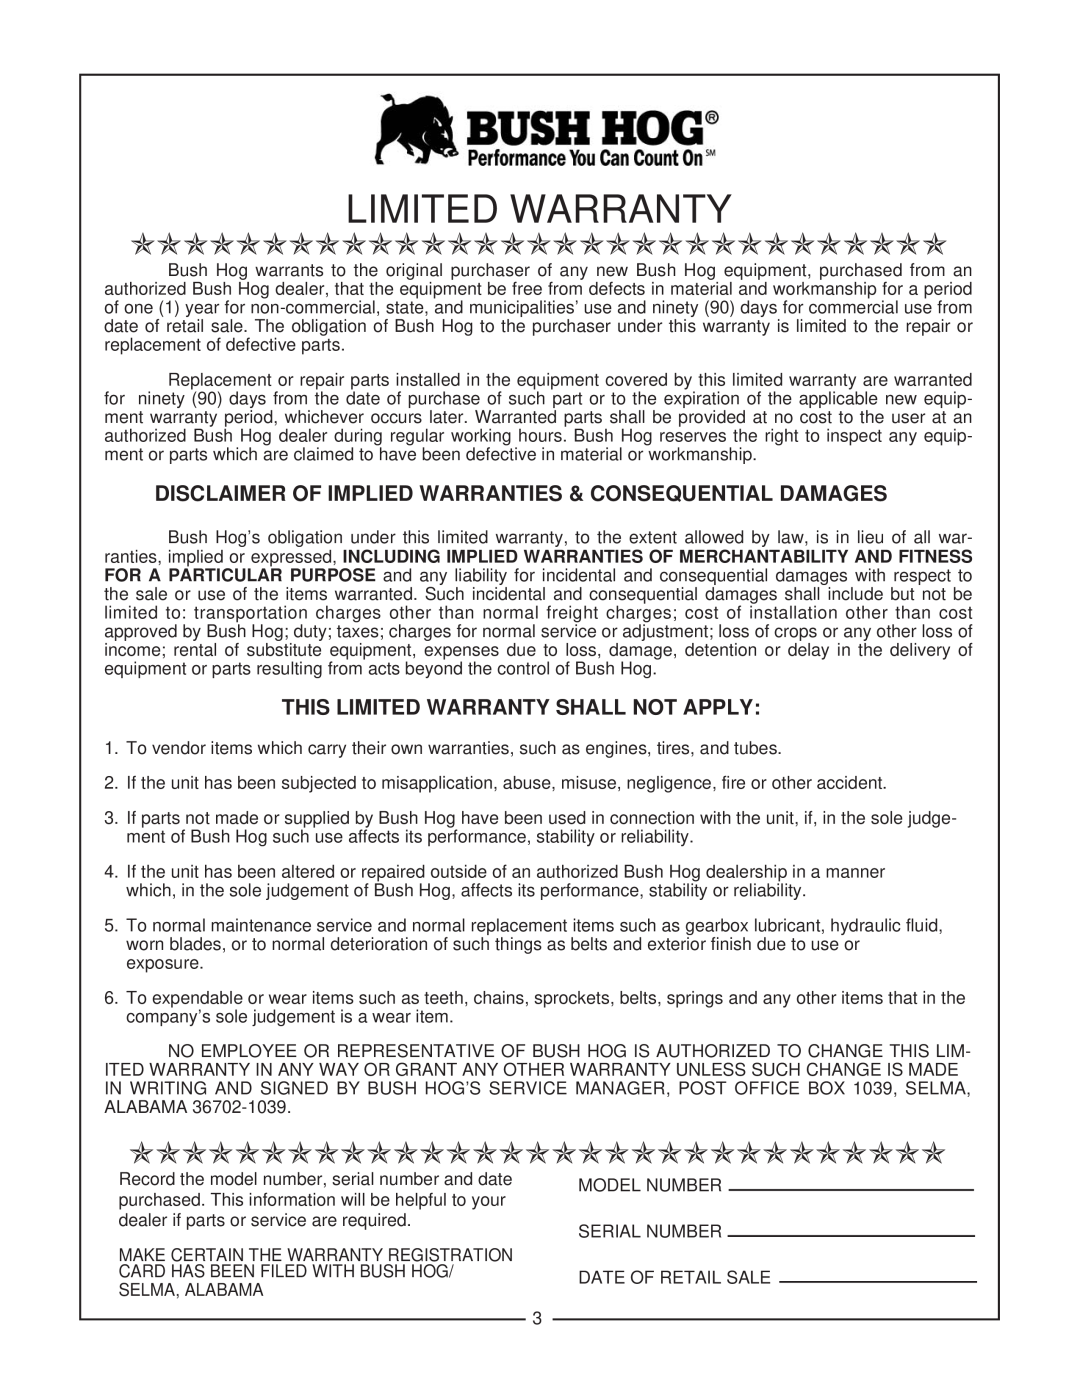 Bush Hog RTS manual This Limited Warranty Shall Not Apply, Ooooooooooooooooooooooooooooooo 